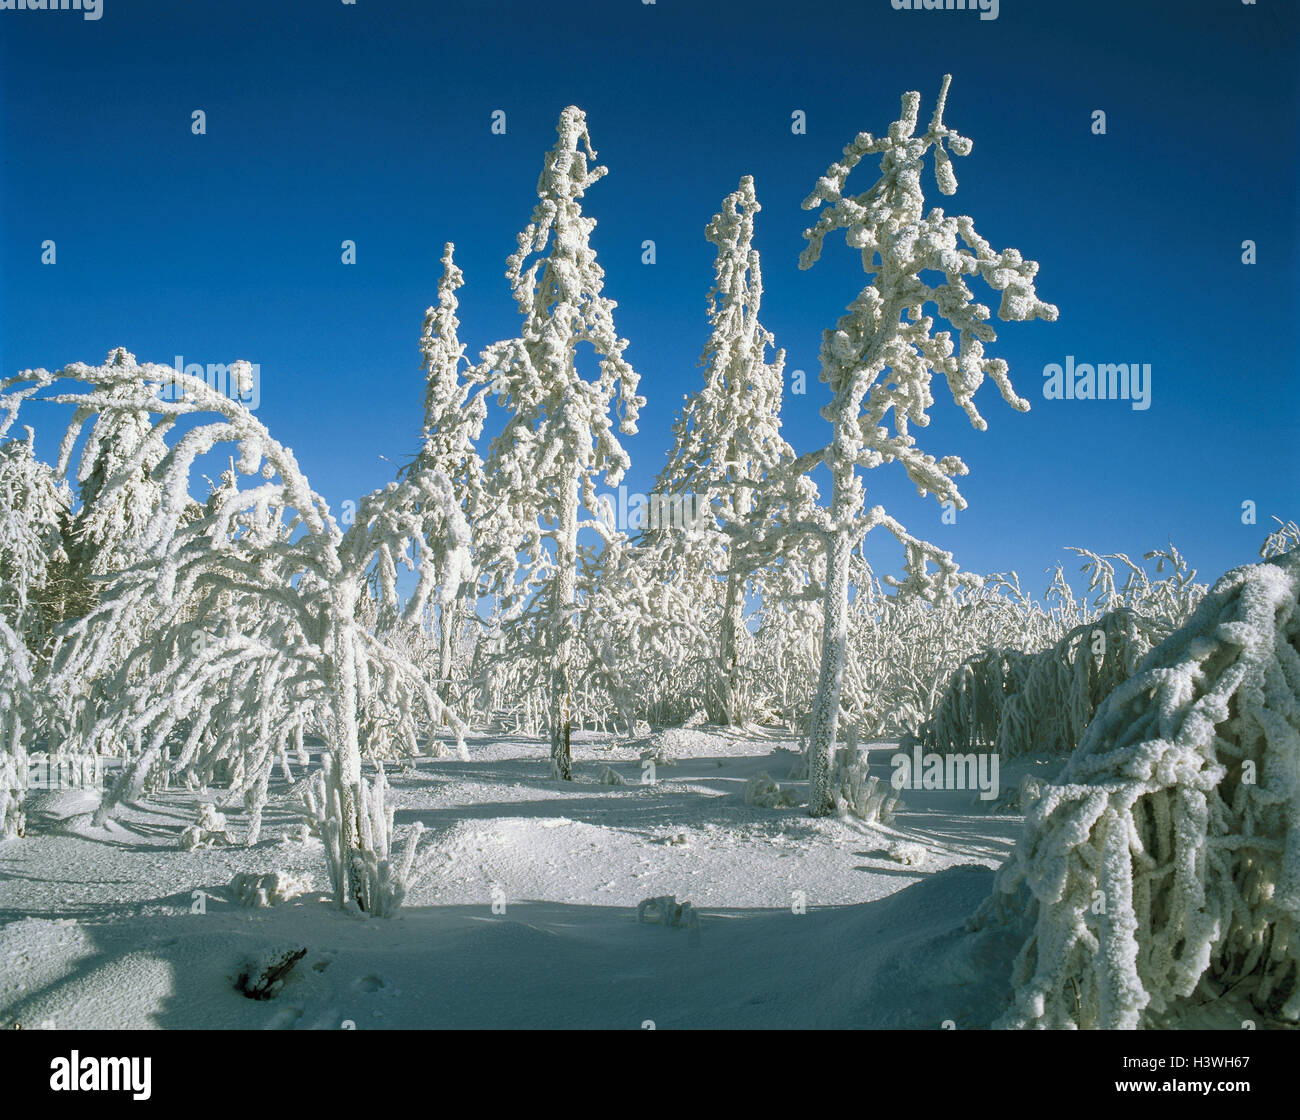 Germany, Saxony, the Erzgebirge, winter, trees, hoarfrost, Europe, winter scenery, season, wintry, nature, cold, heaven, cloudless, Stock Photo